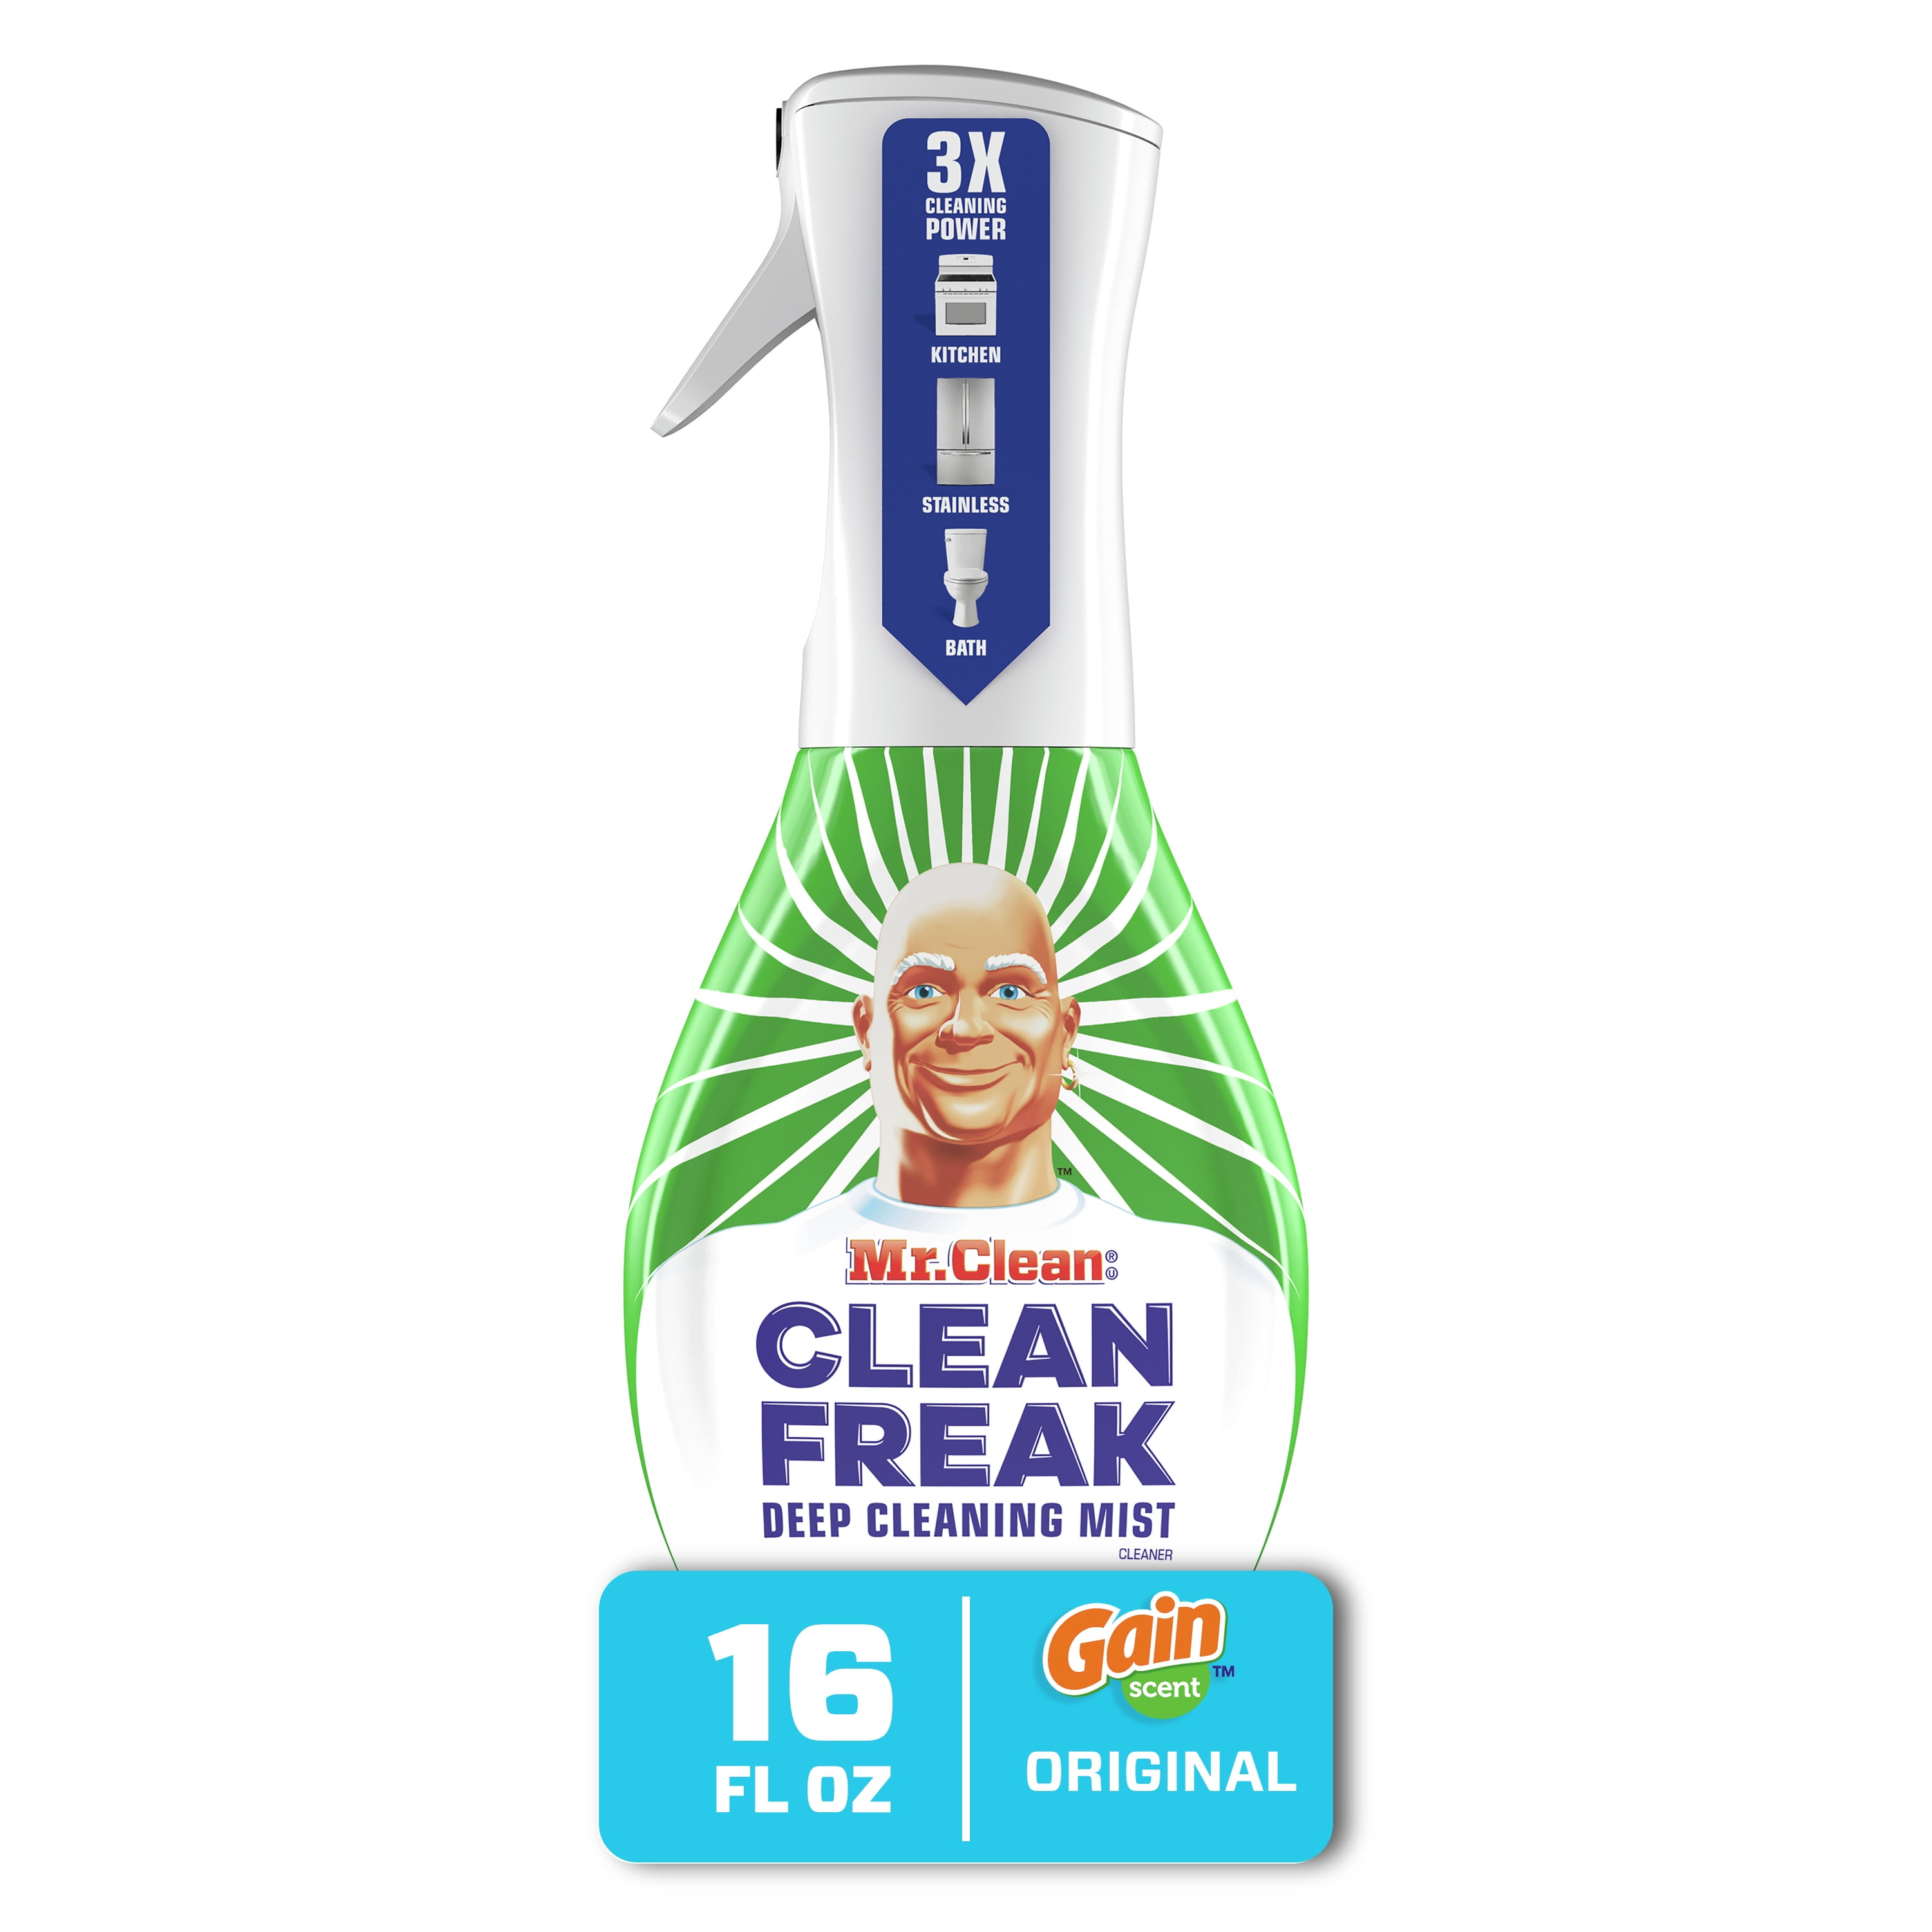 Mr. Clean Clean Freak Multi-Surface Spray Starter Kit, Gain Original